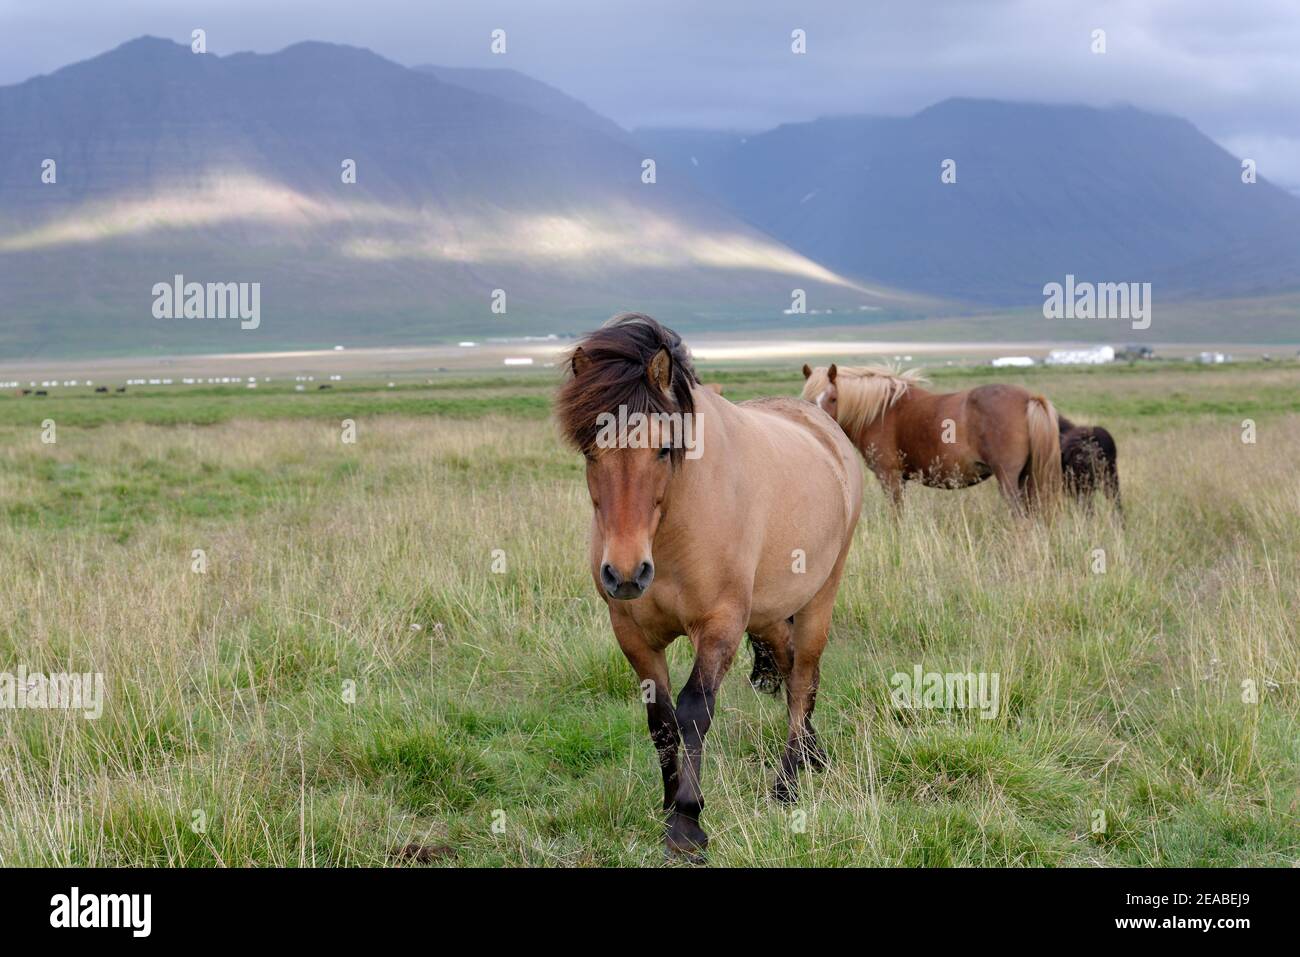 Chevaux islandais (Equus ferus caballus), dun, litla a, Akureyri, nord de l'Islande Banque D'Images